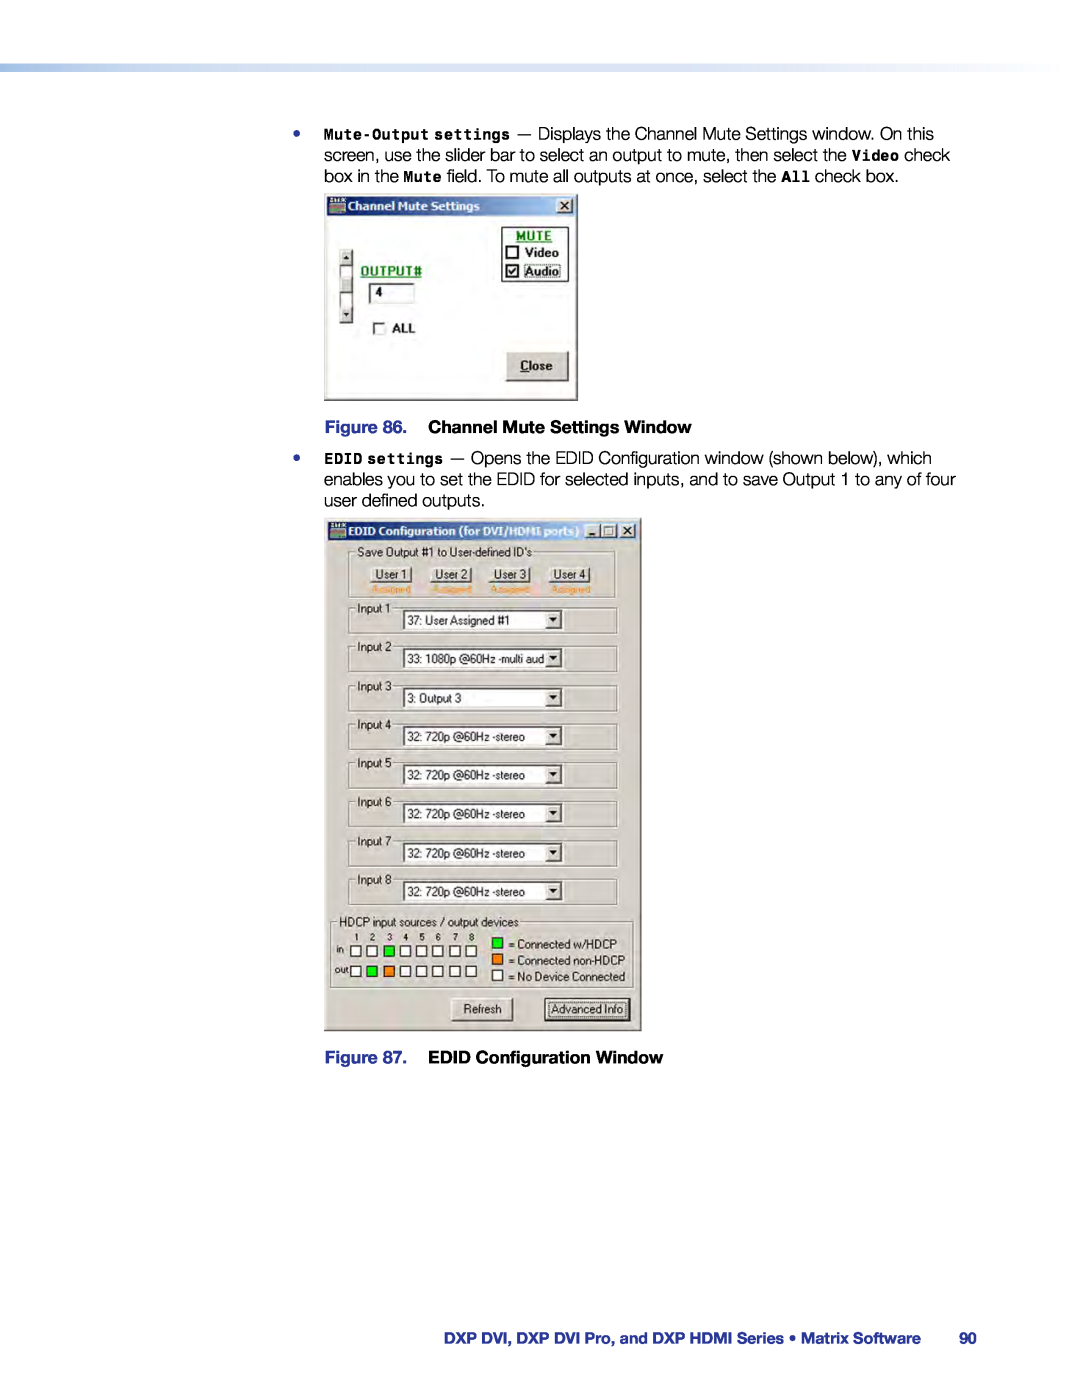 Extron electronic DXP DVI PRO manual Channel Mute Settings Window, EDID Configuration Window 